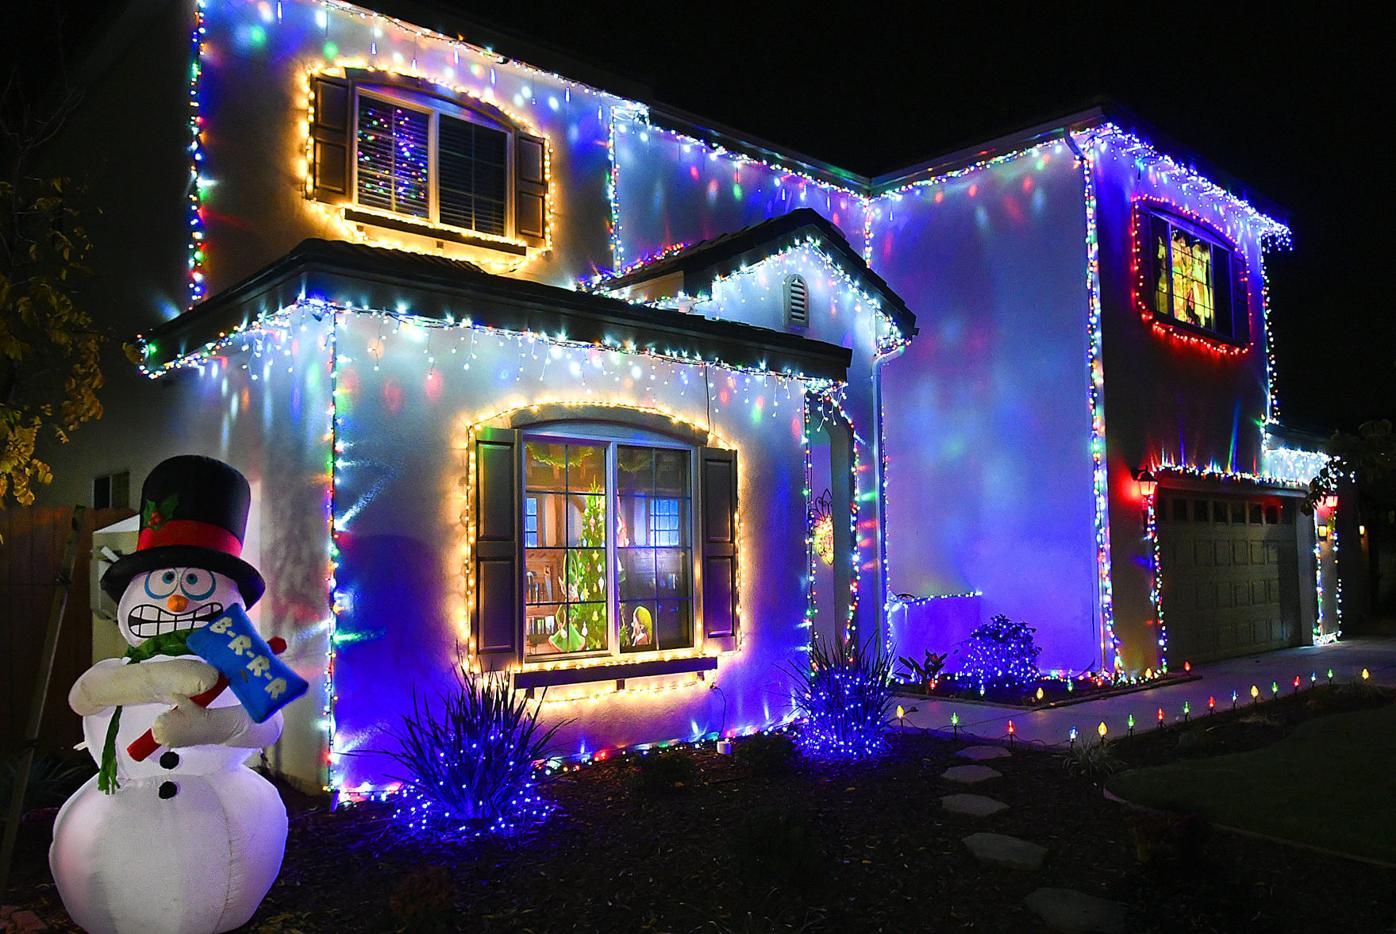 Santa Maria Lights Sights Holiday Nights Decorating Contest Begins Nov 16 Local News Santamariatimes Com